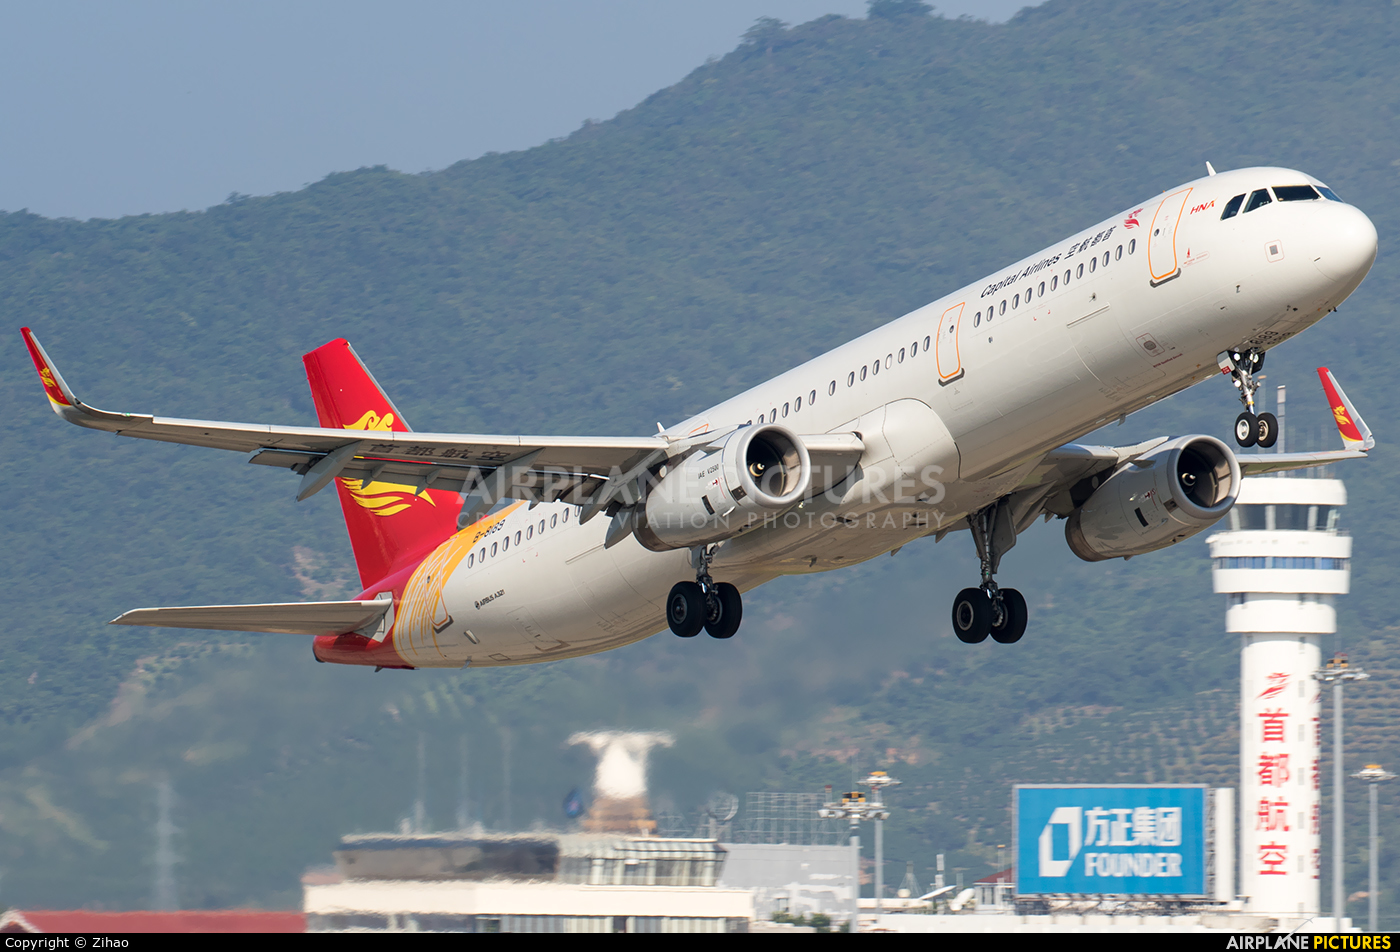 Capital Airlines Beijing B-8189 aircraft at Sanya Phoenix Intl